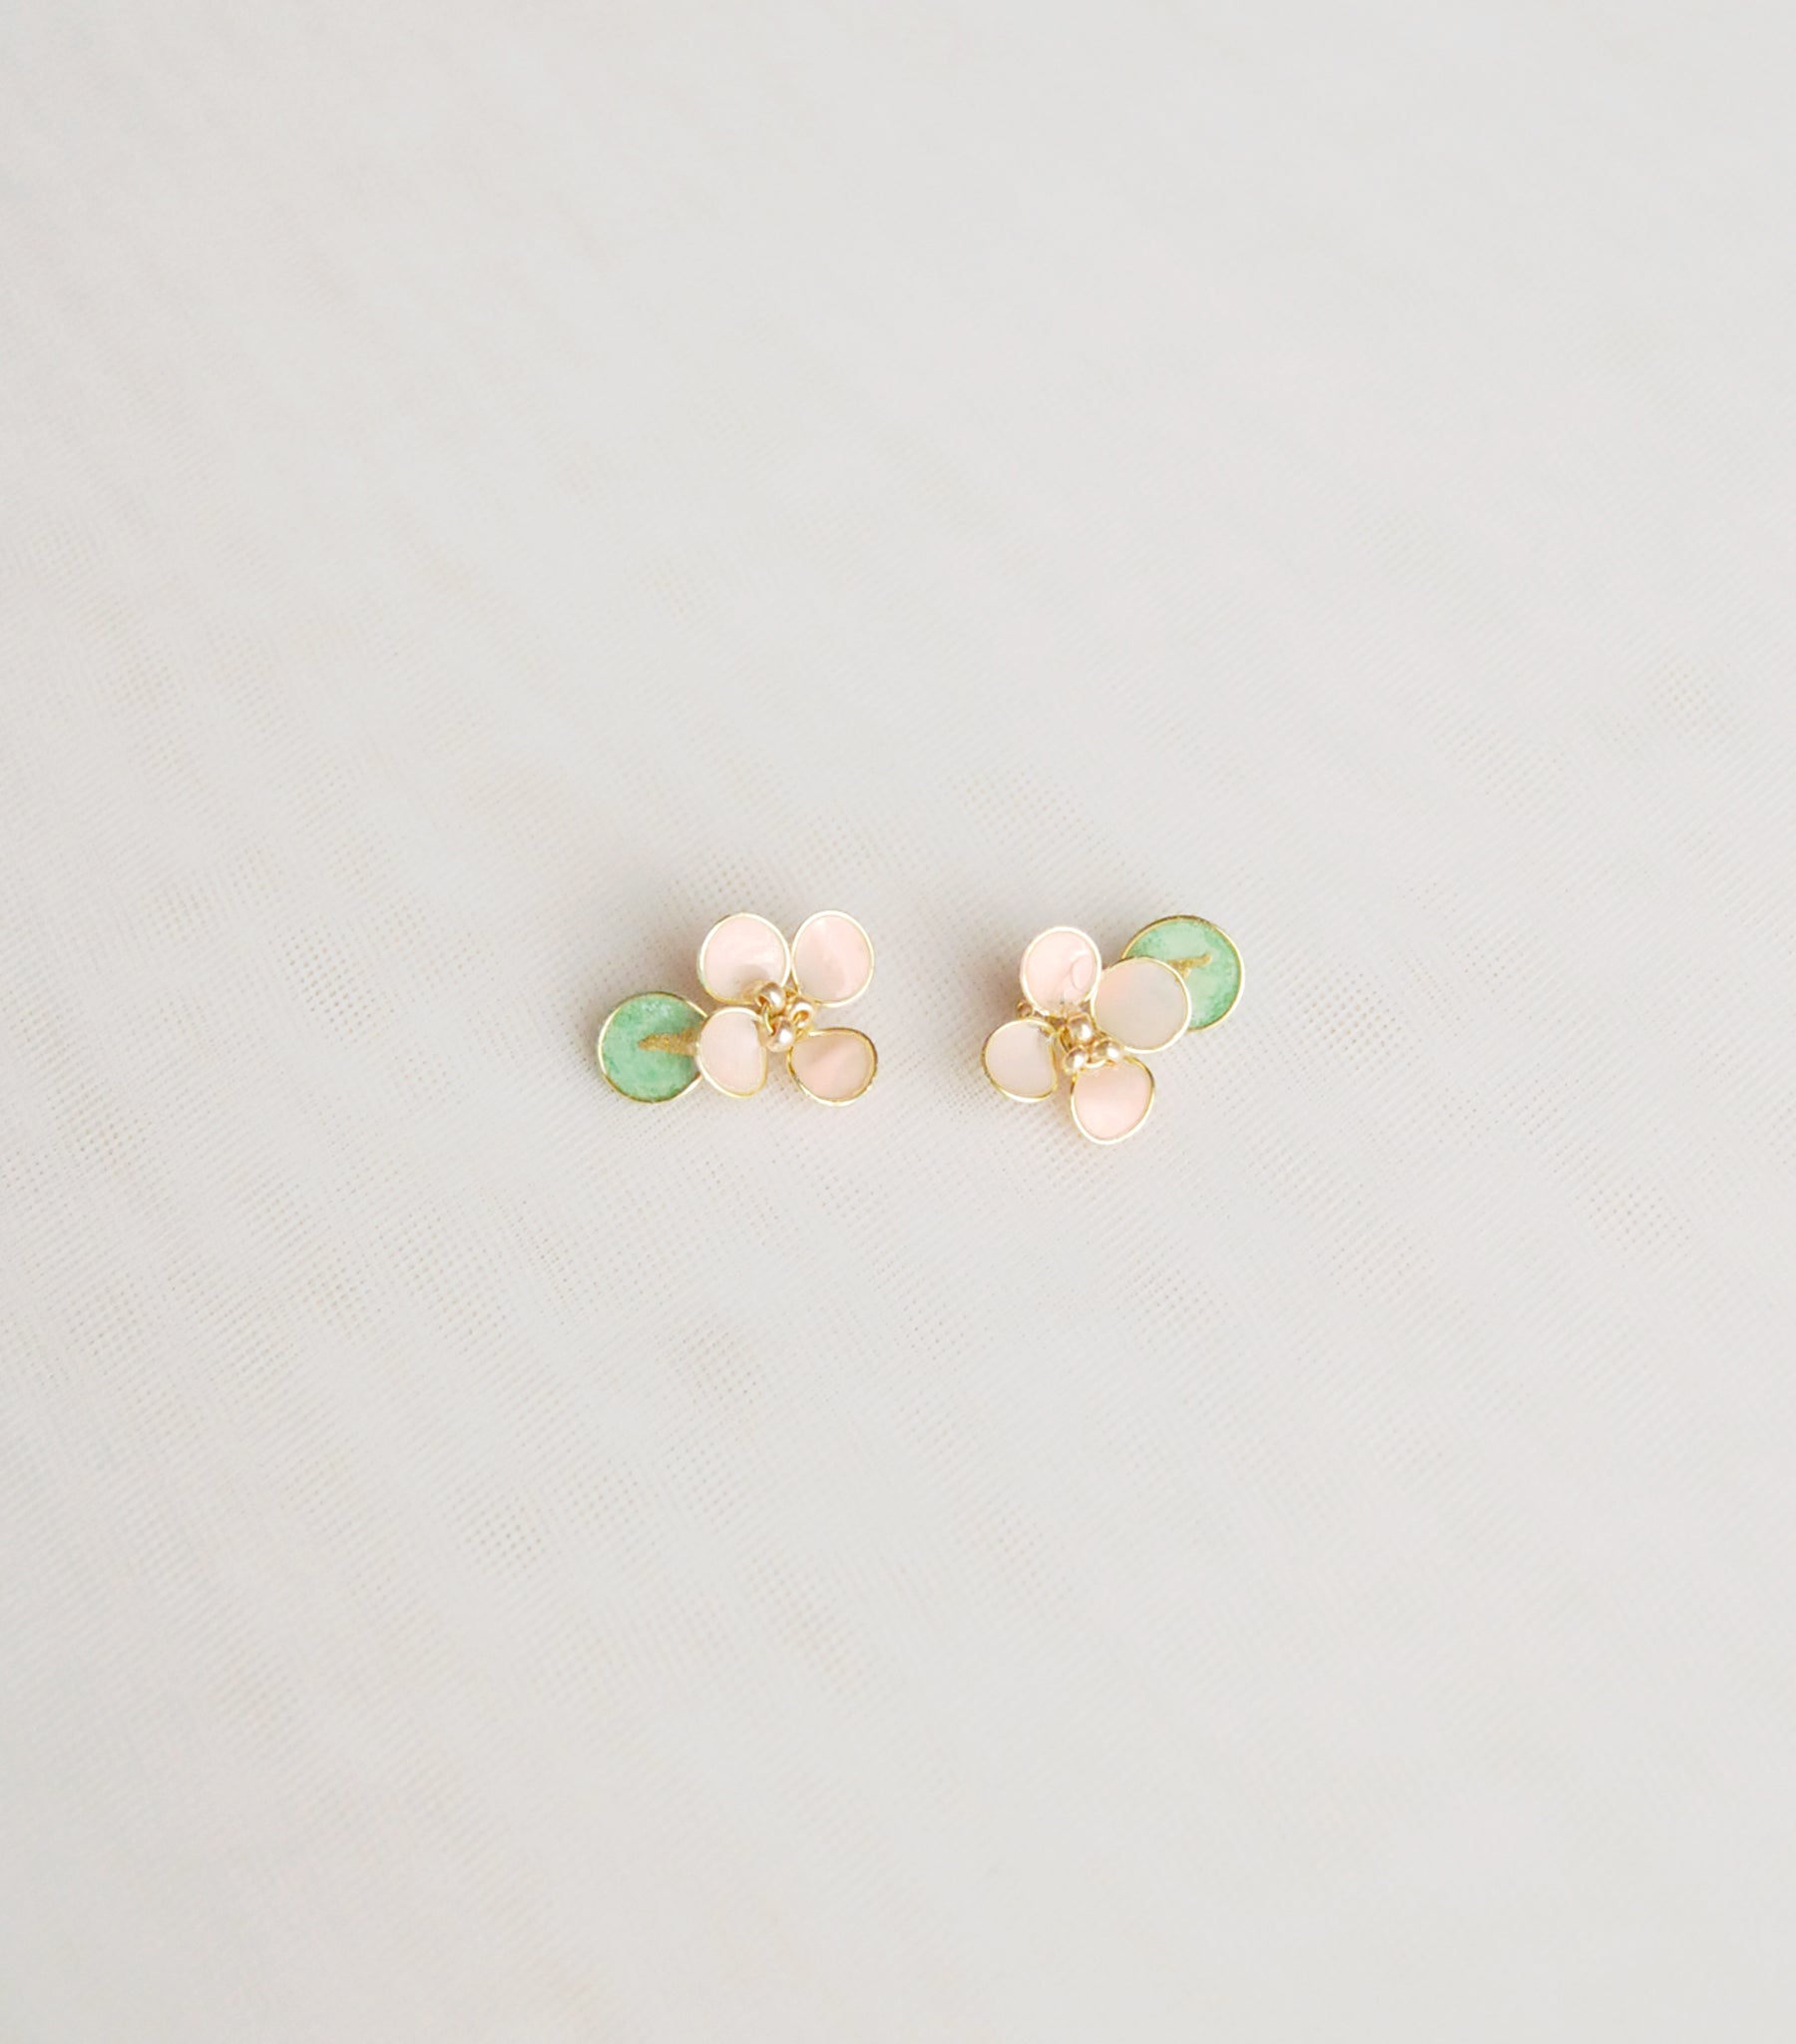 Flowers and eucalyptus earrings